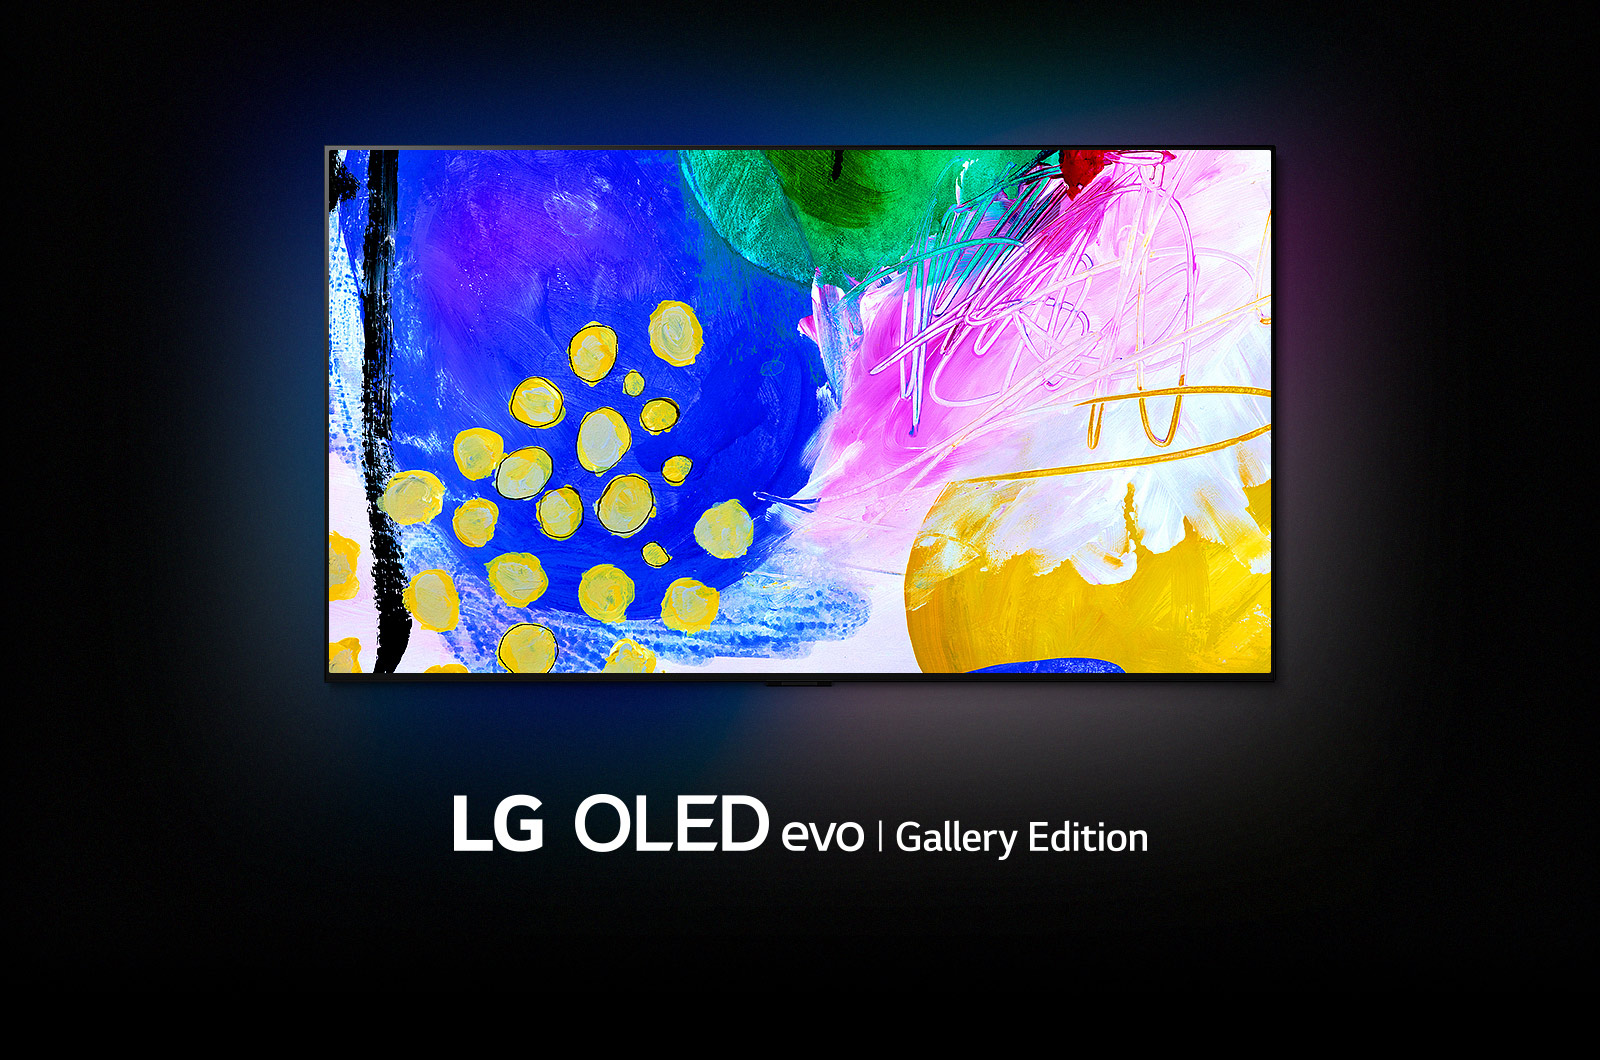 LG OLED G2 berada di ruangan gelap dengan karya seni abstrak yang penuh warna di layarnya dan kata -kata 